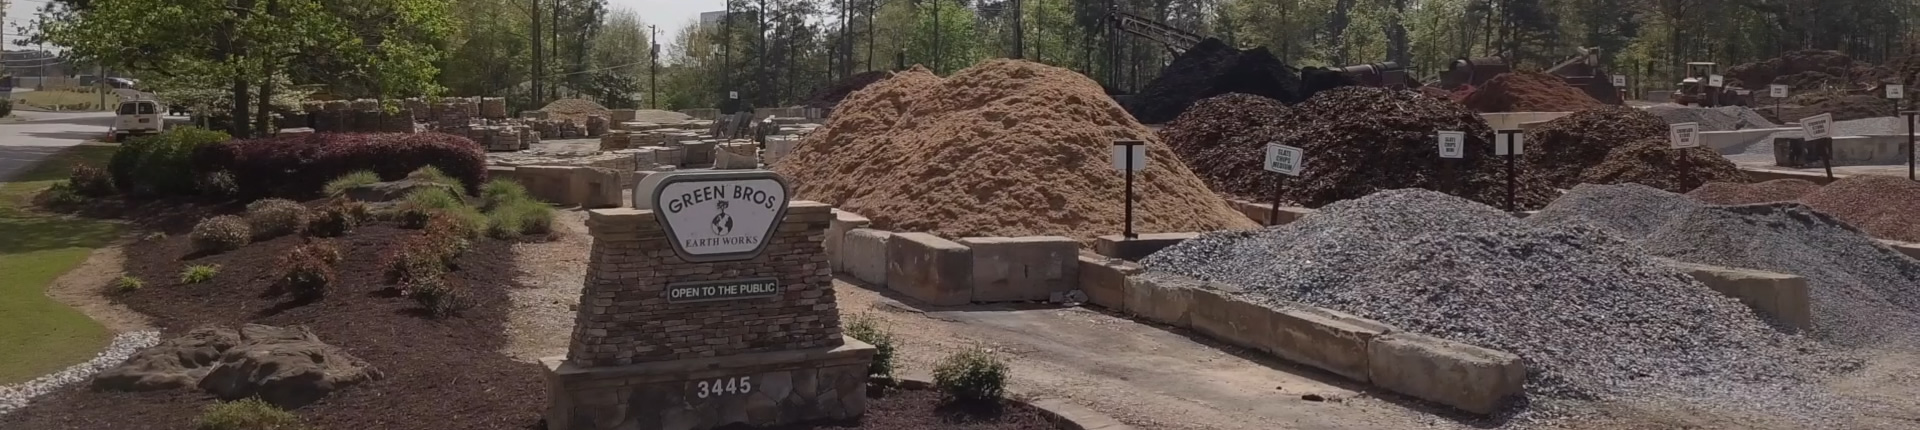 Alpharetta River Sand Delivered, Atlanta Landscape Materials